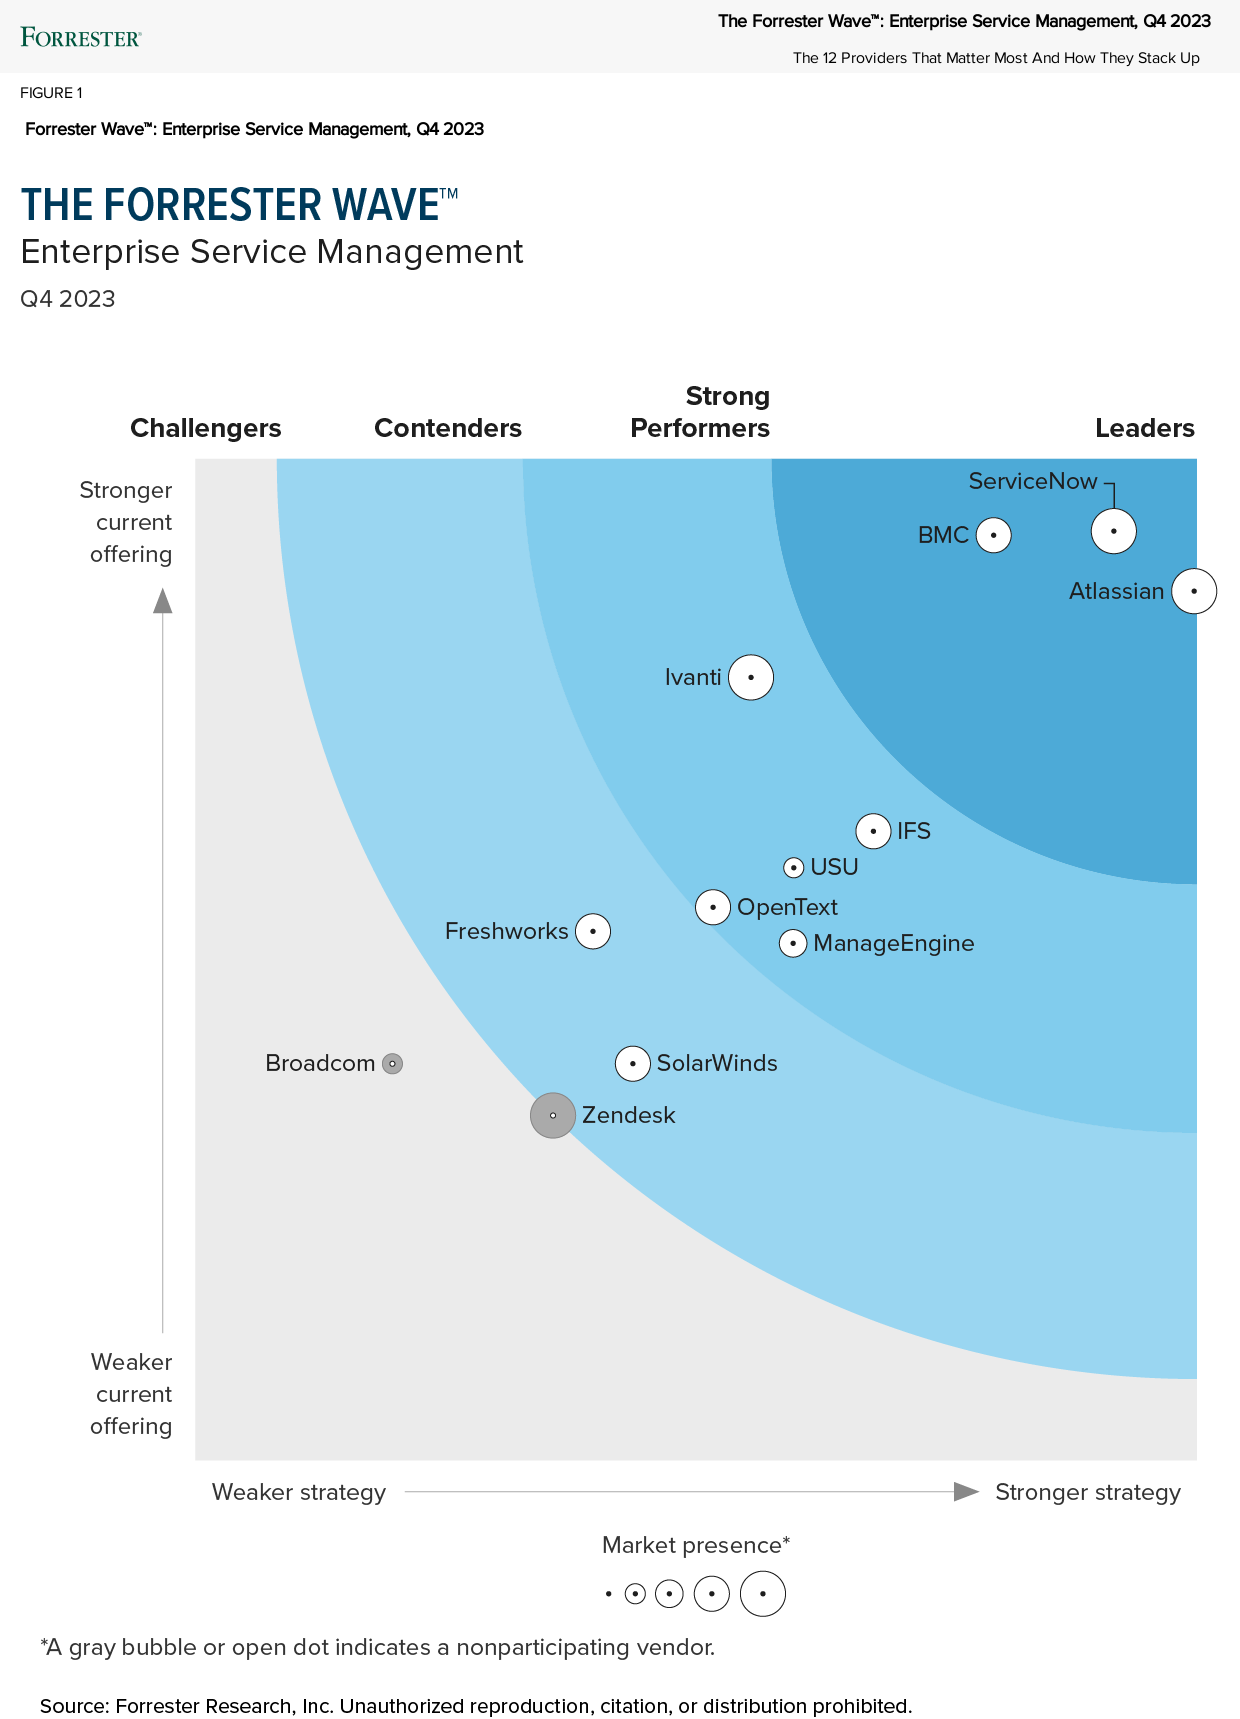 2021, Q4 Forrester Wave Enterprise Service Management graph